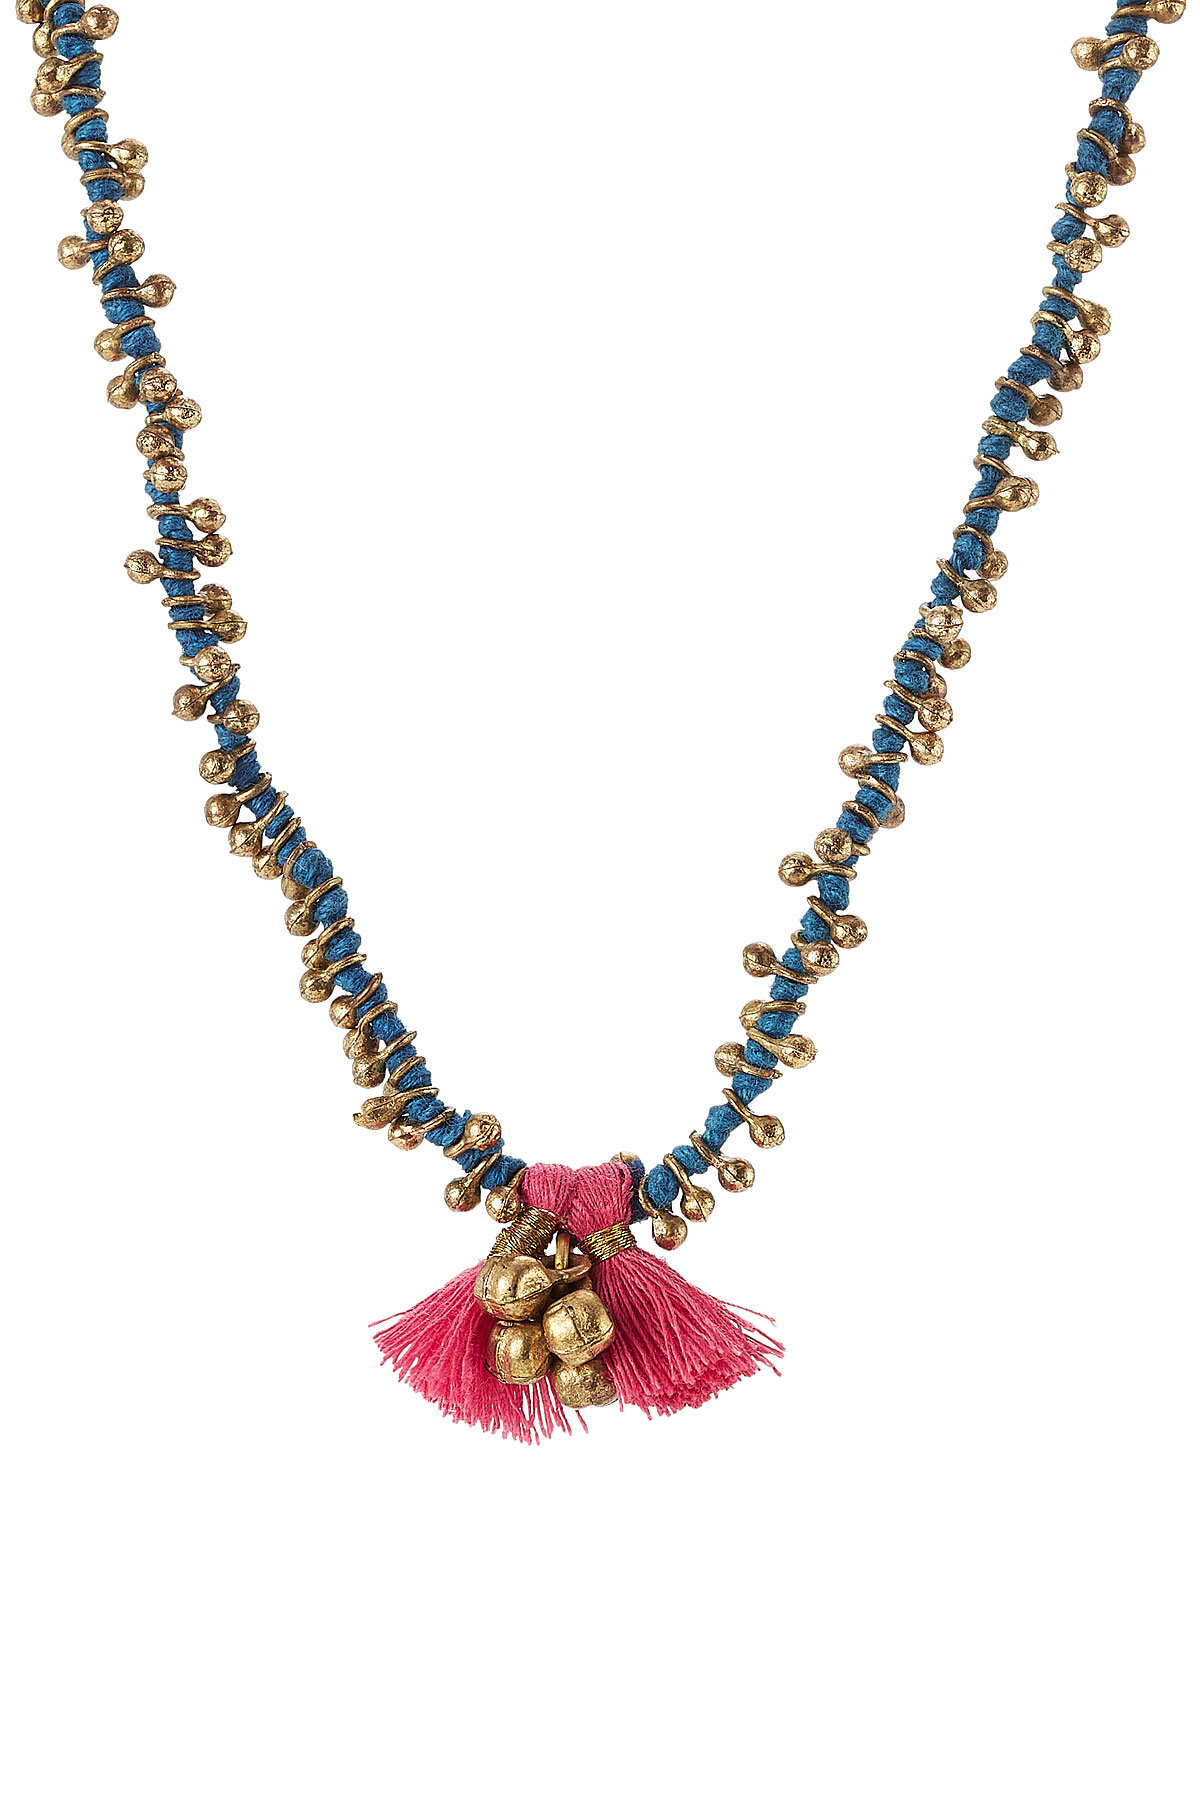 Blue Hippy - Embellished Necklace with Tassel